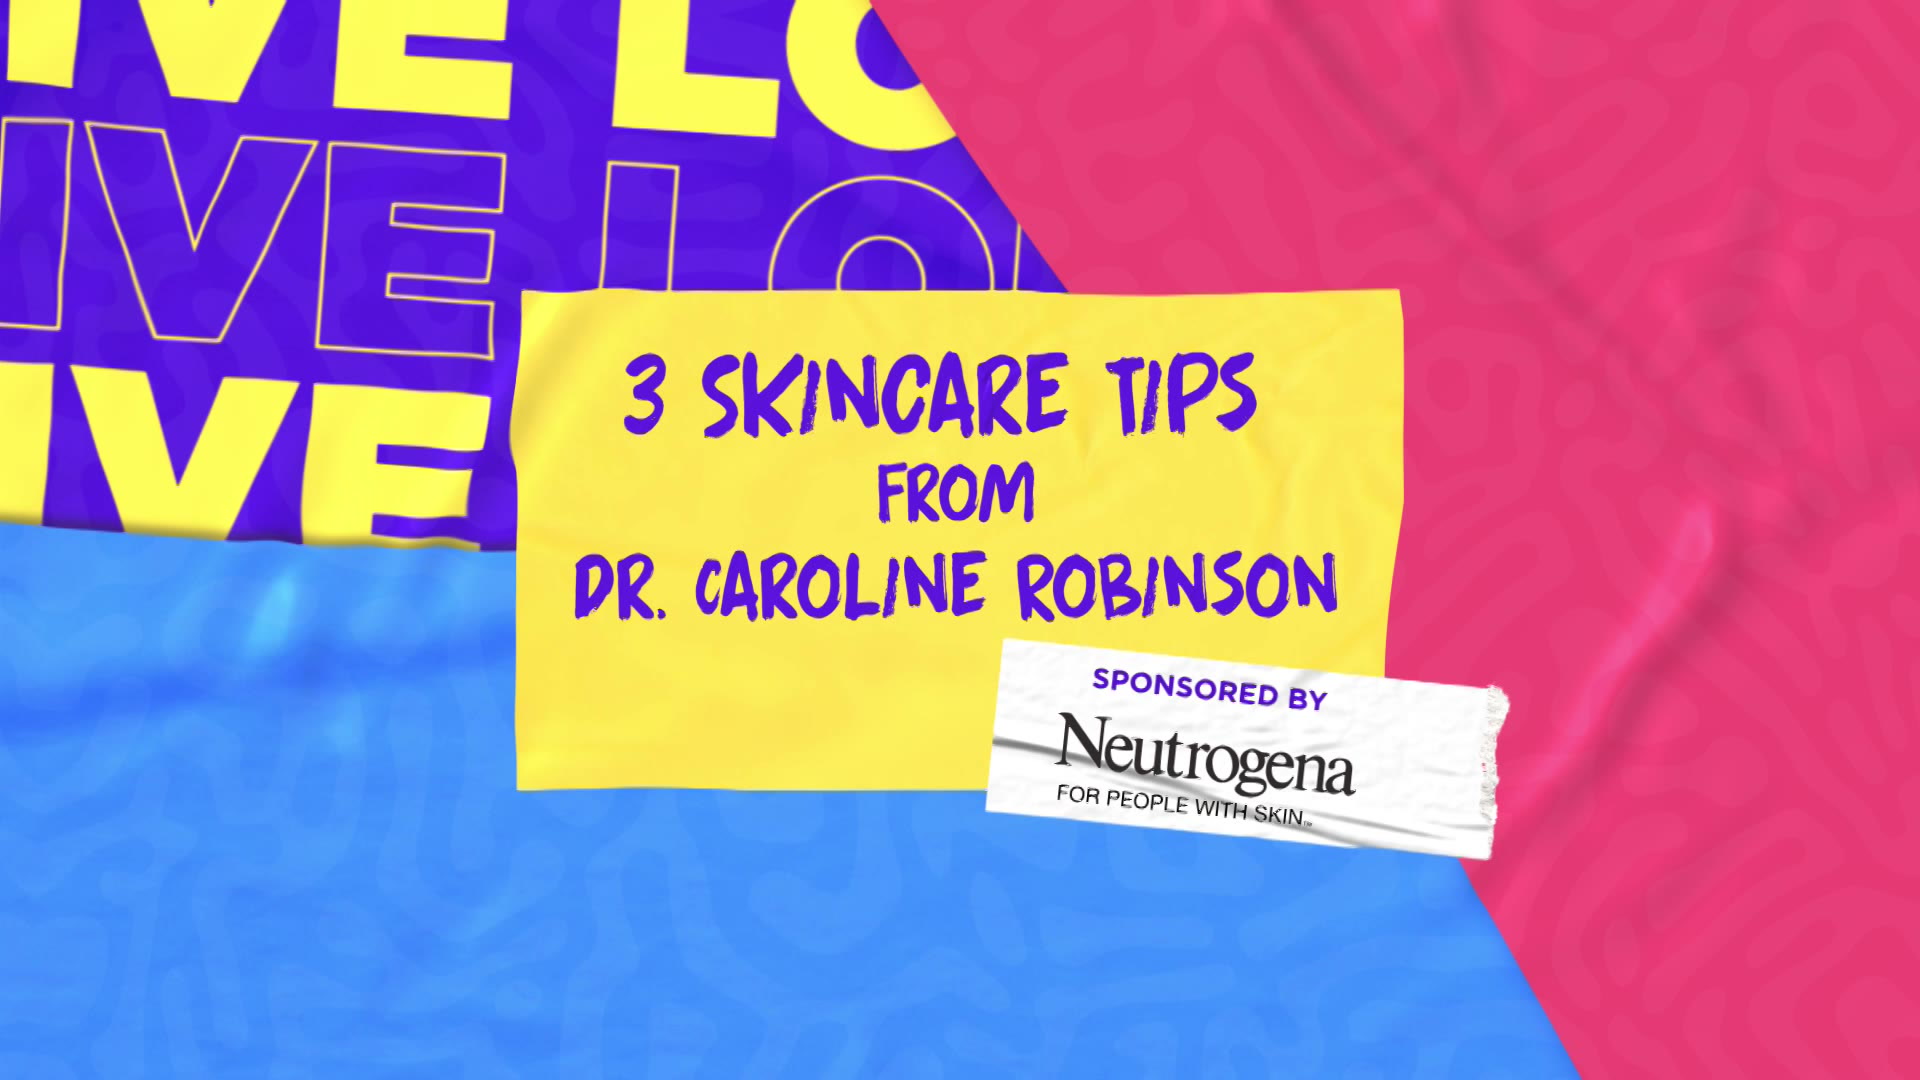 3 skincare tips from Dr. Caroline Robinson